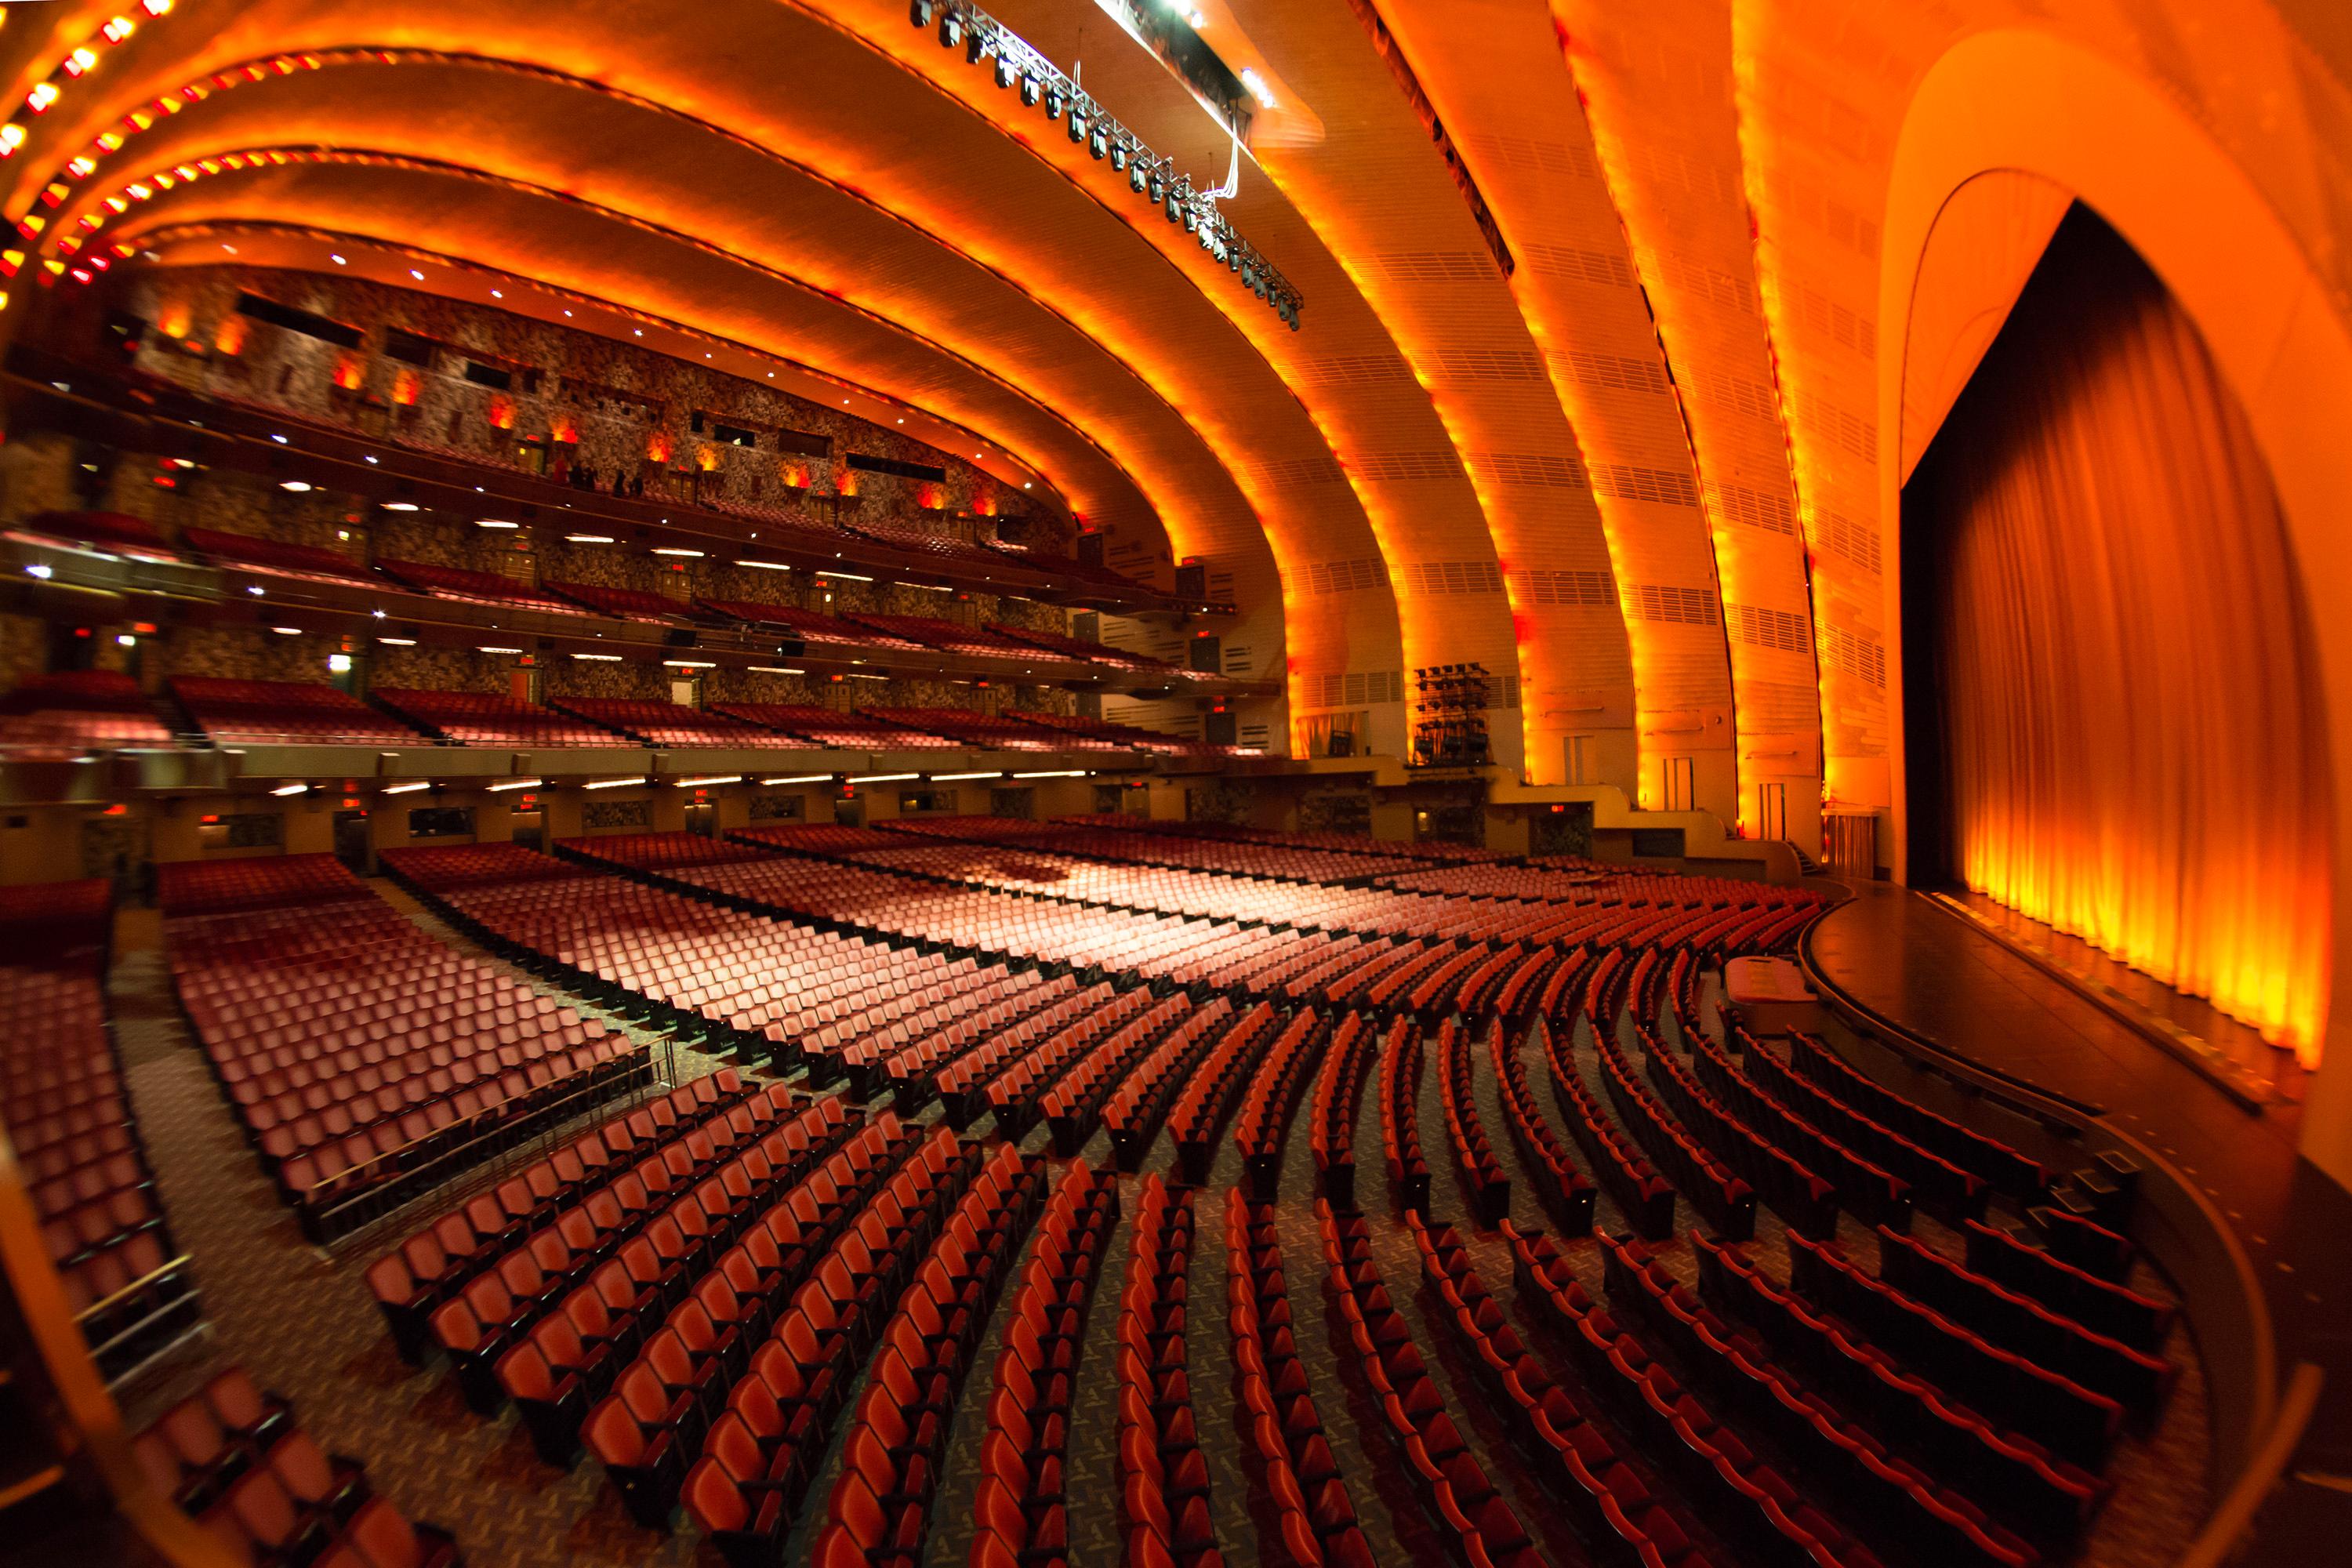 Radio City Music Hall Theater Seating Chart